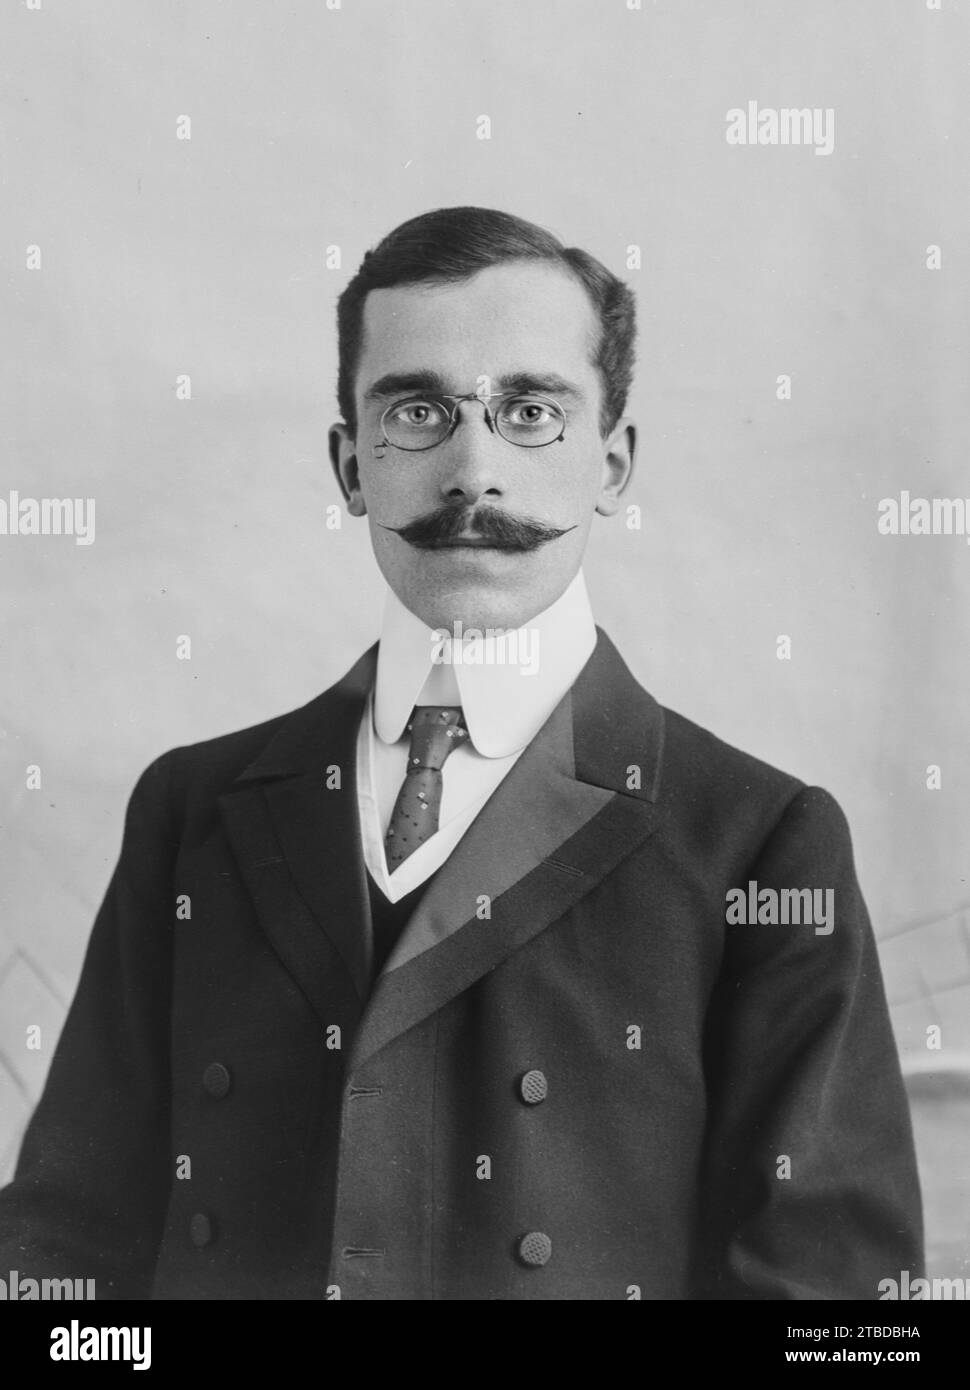 Pince-nez 2, Formal Young German man 1917 wearing a classic…